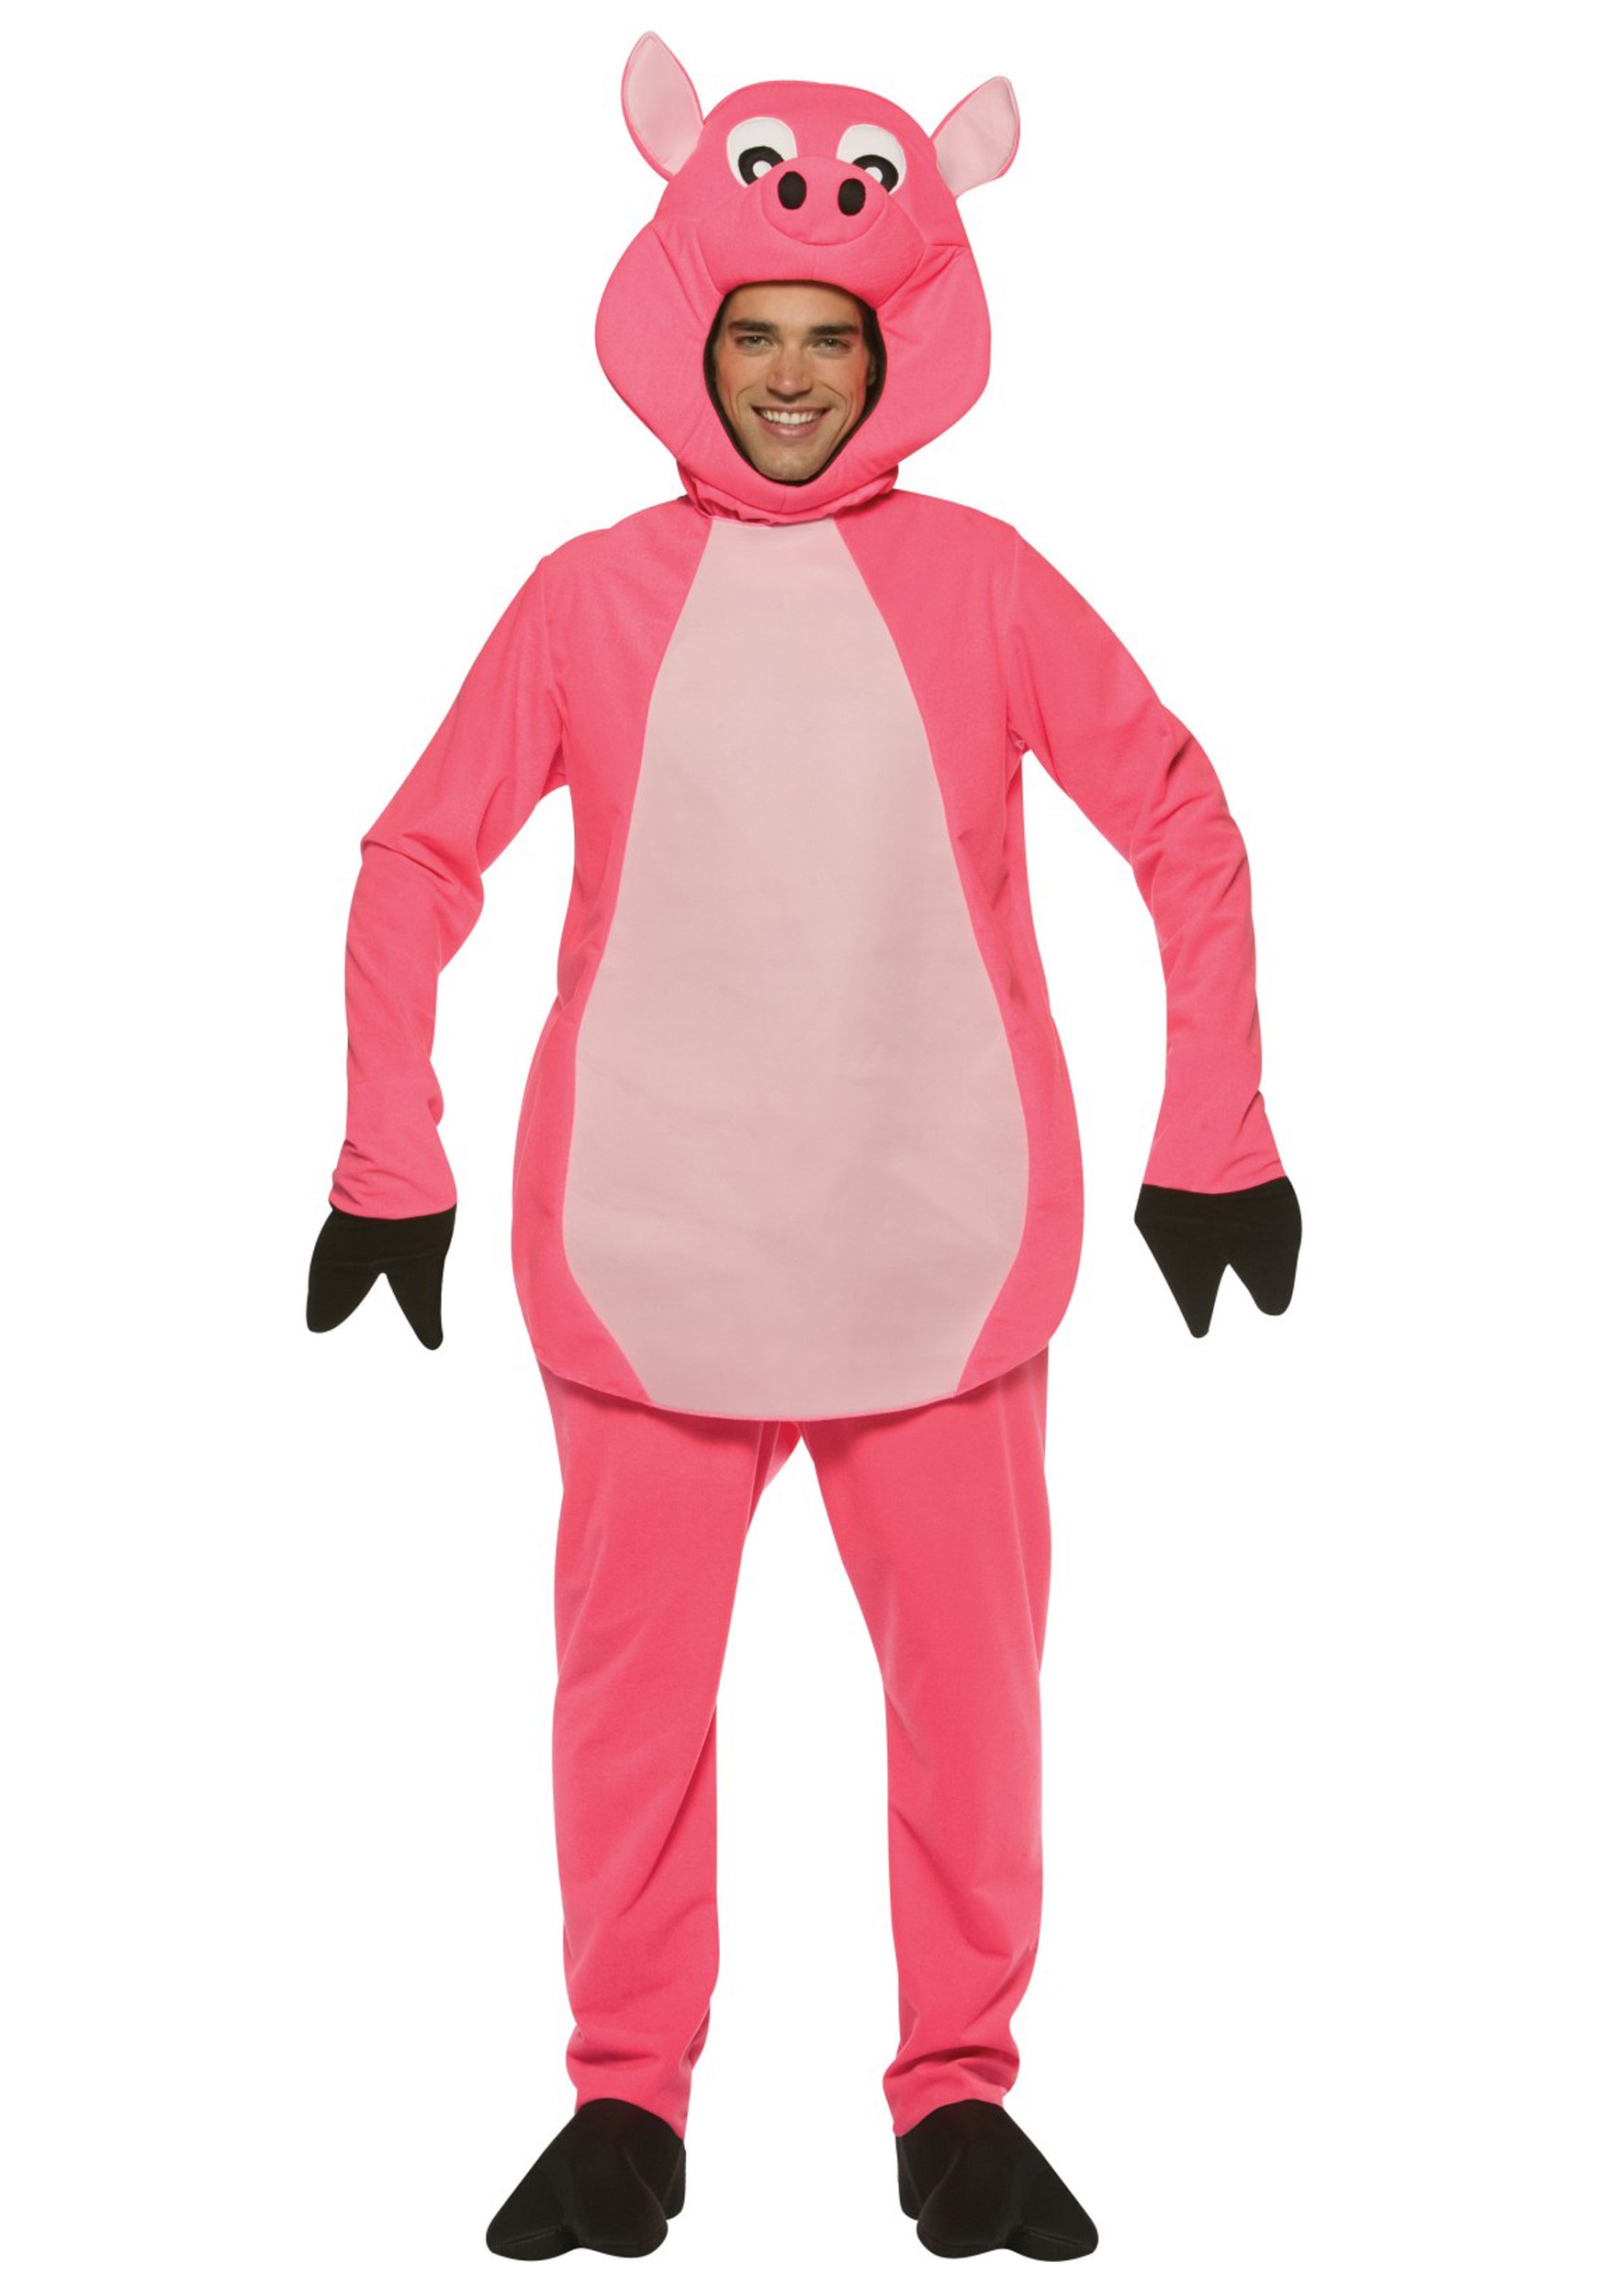 Image of Adult Pink Pig Costume ID RA6506-ST